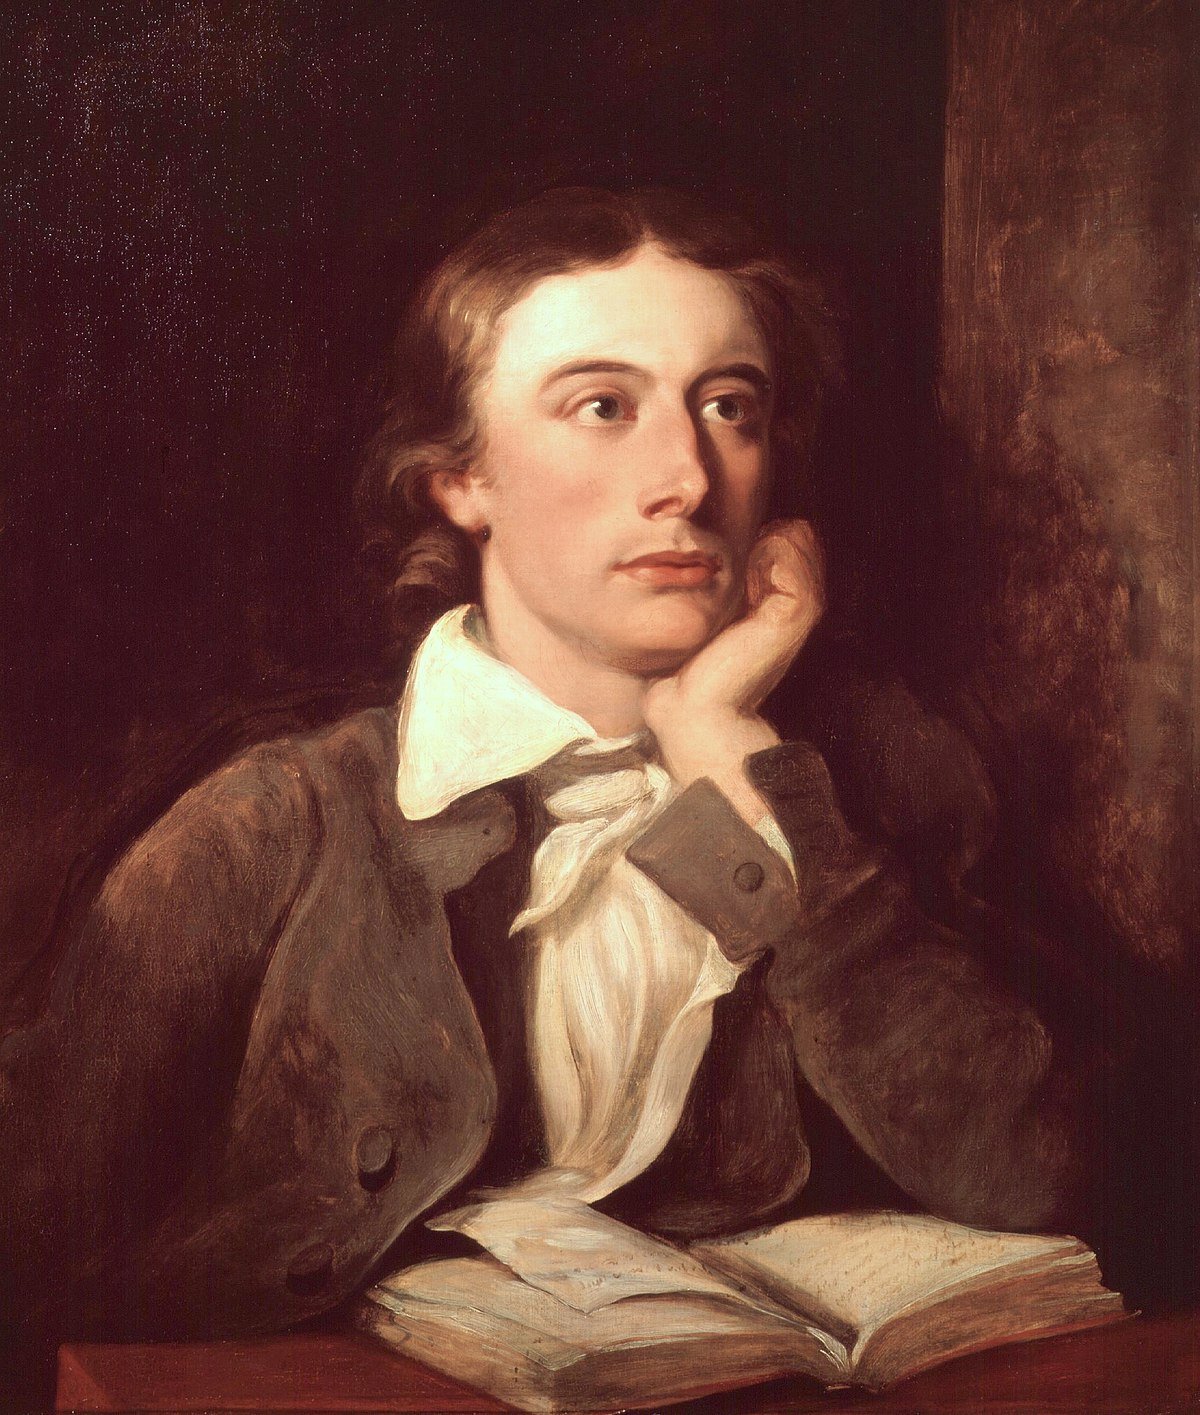 La paloma, de John Keats